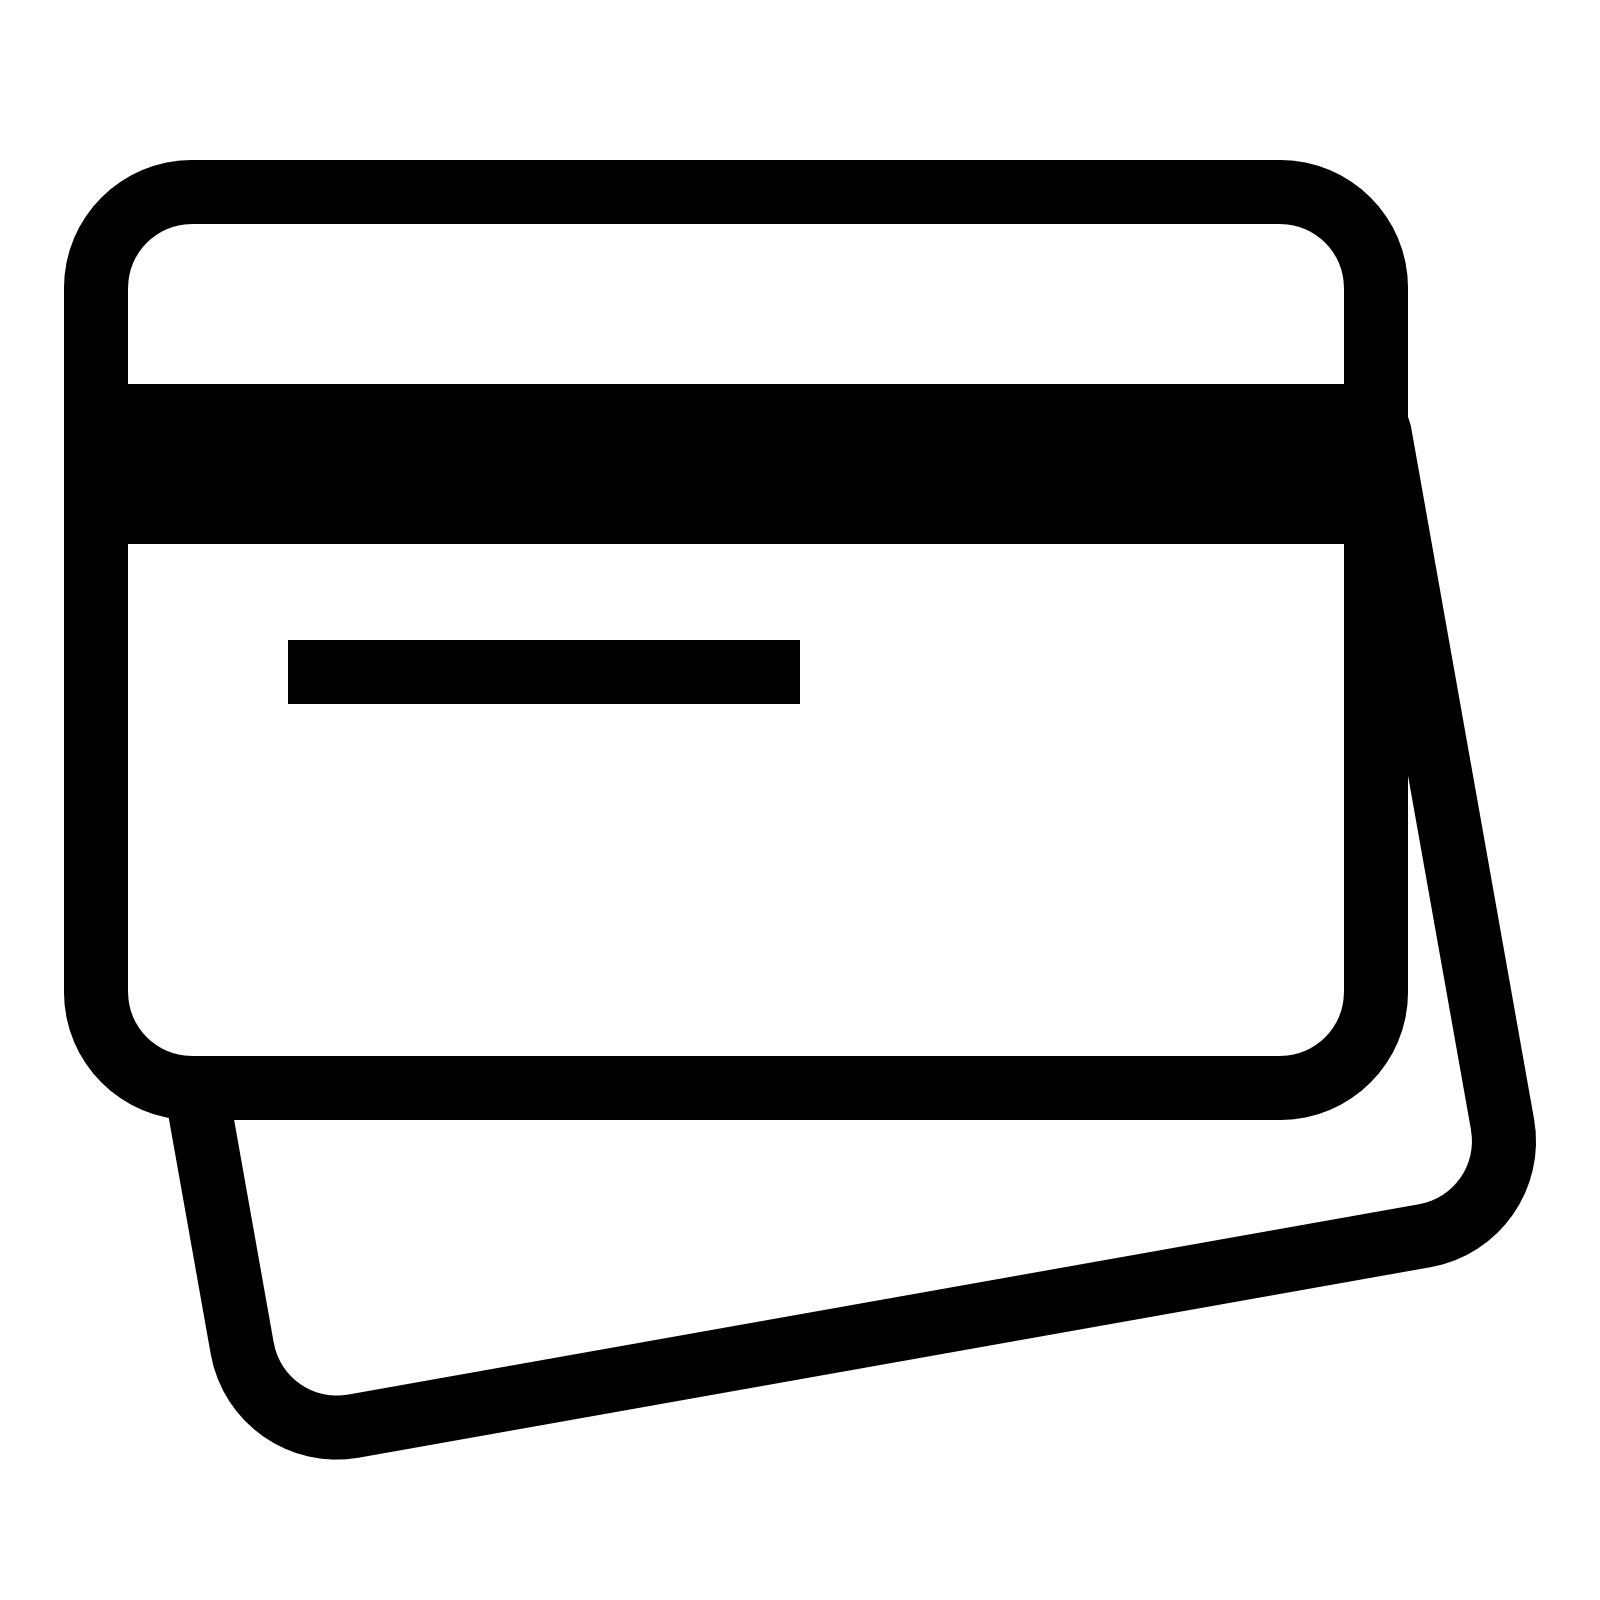 Kreditkarte PNG kostenloses Bild